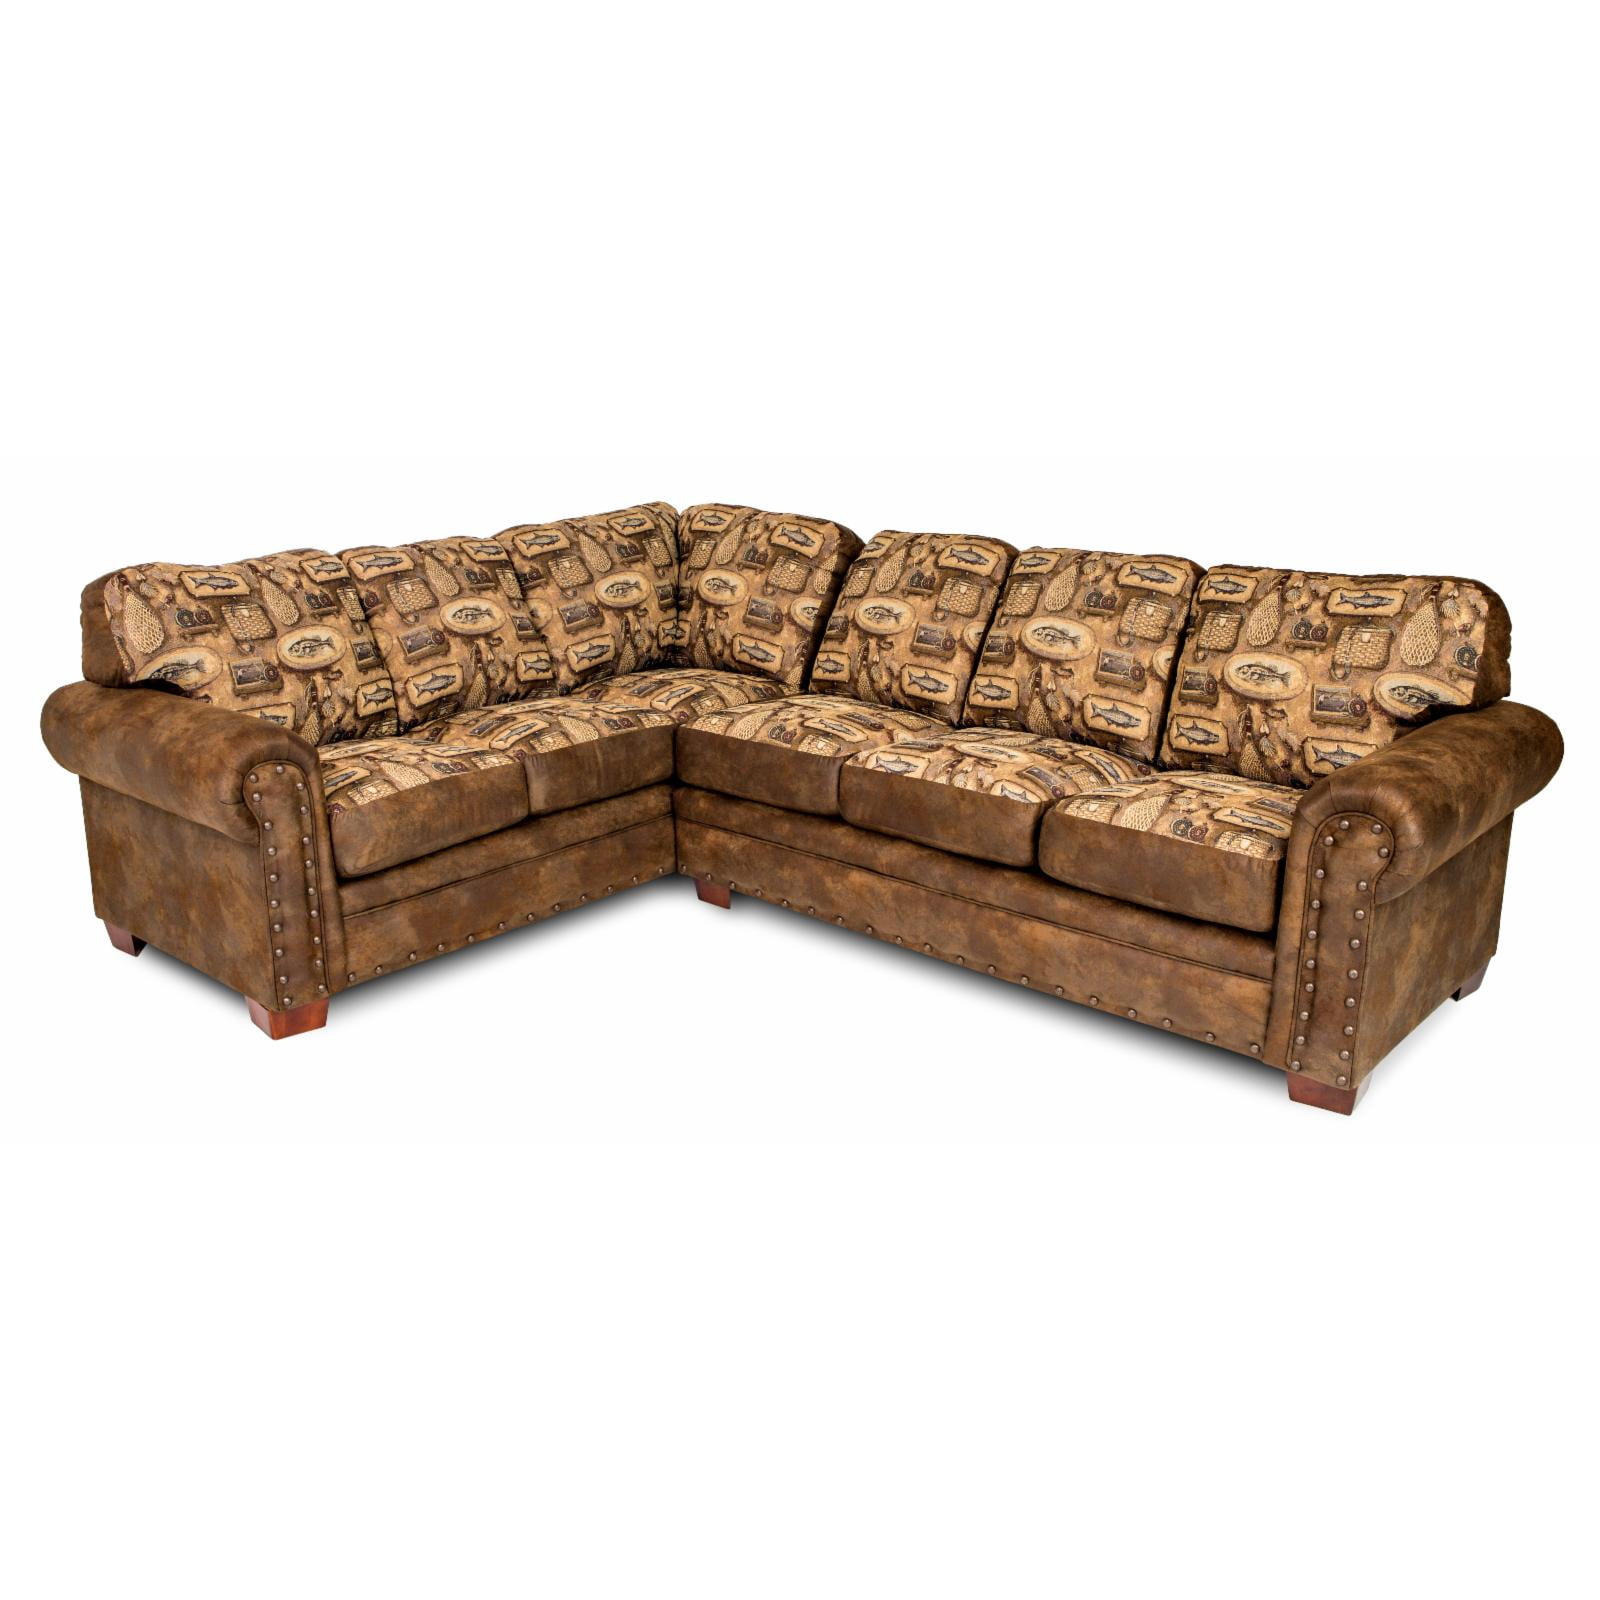 American Furniture Classics 8506-80K 36 x 67 x 37 in. River Bend Sectional Sofa, Abington Sand - 2 Piece